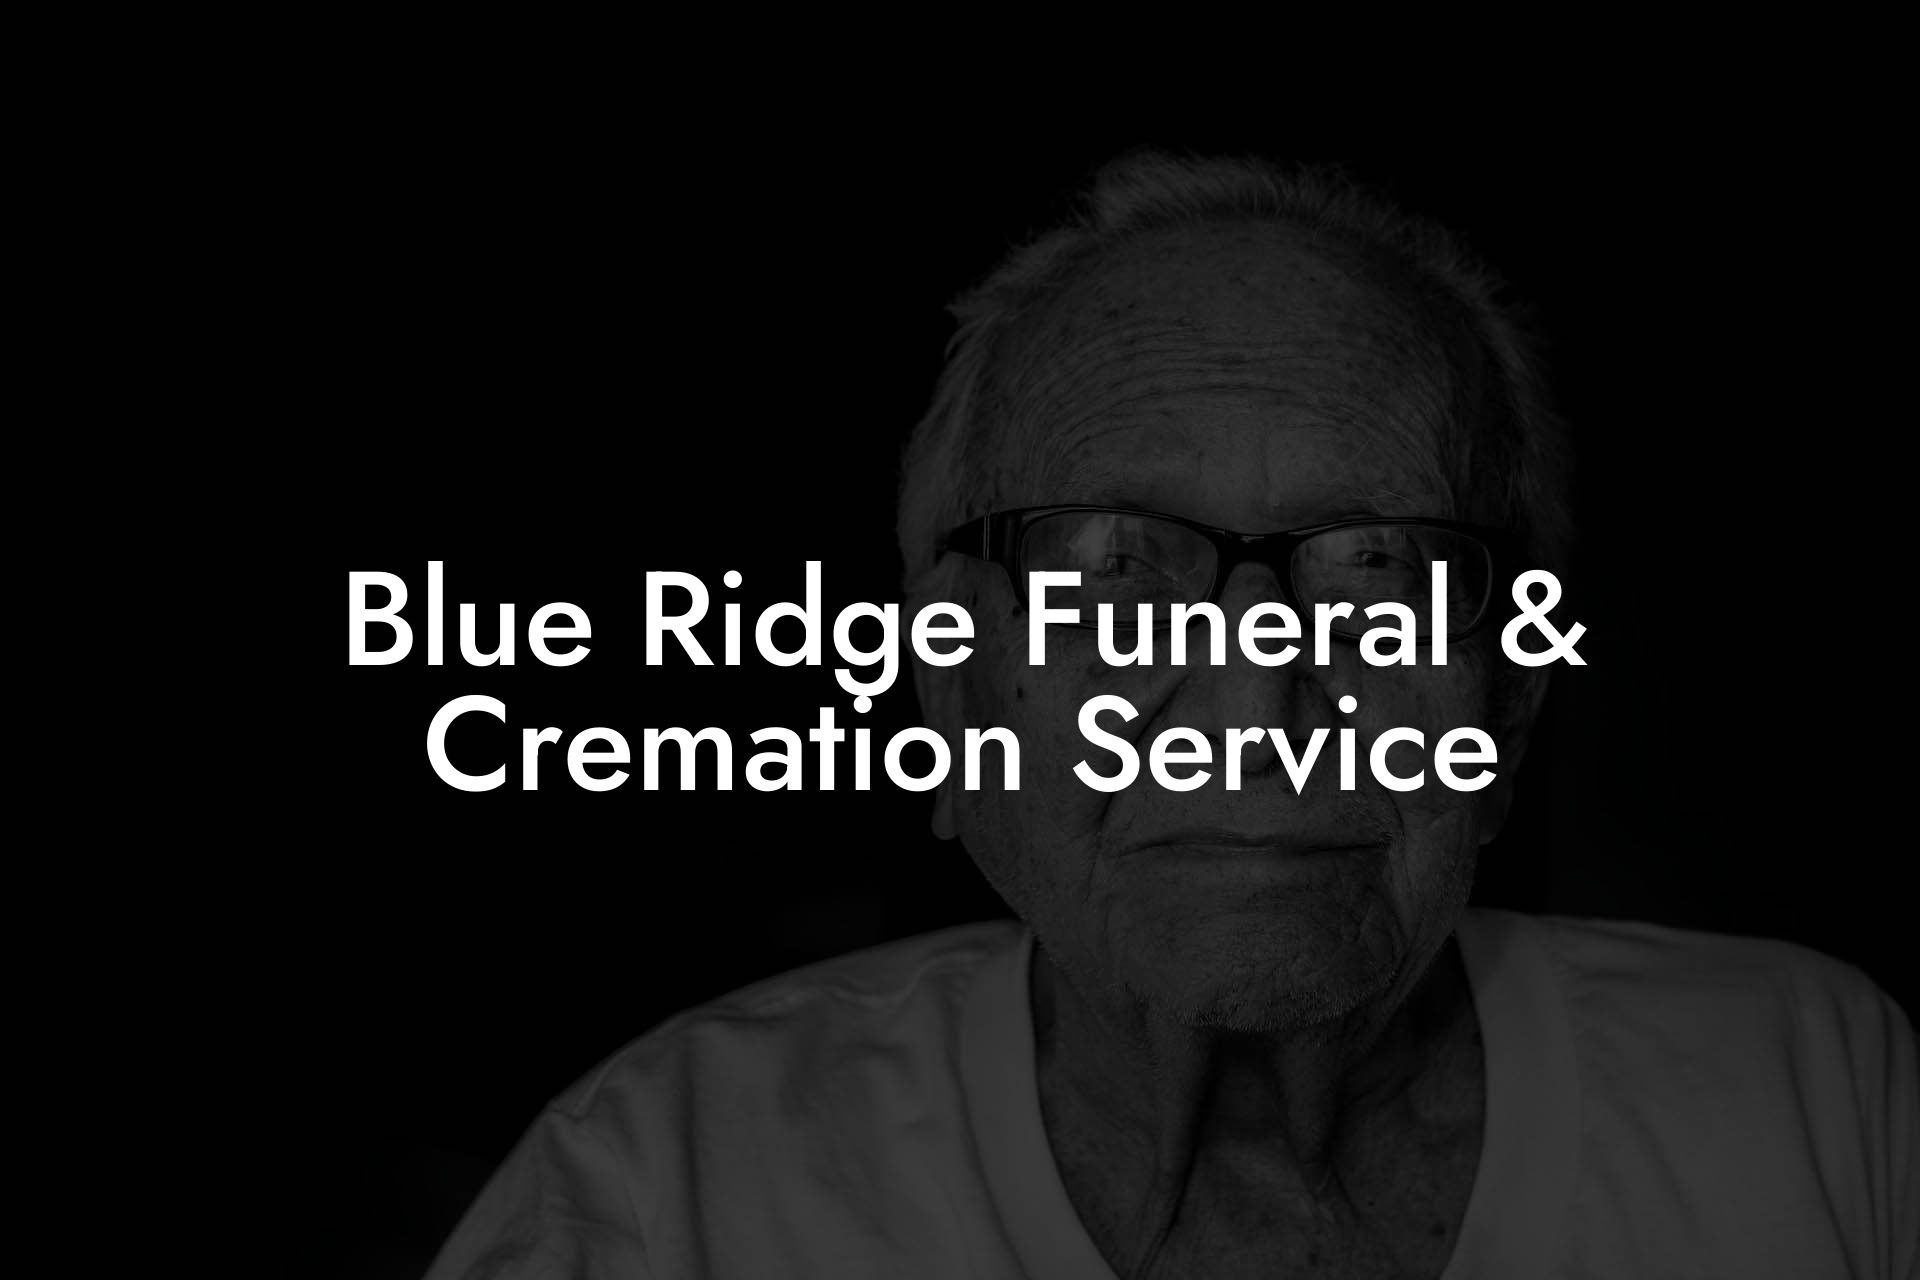 Blue Ridge Funeral & Cremation Service